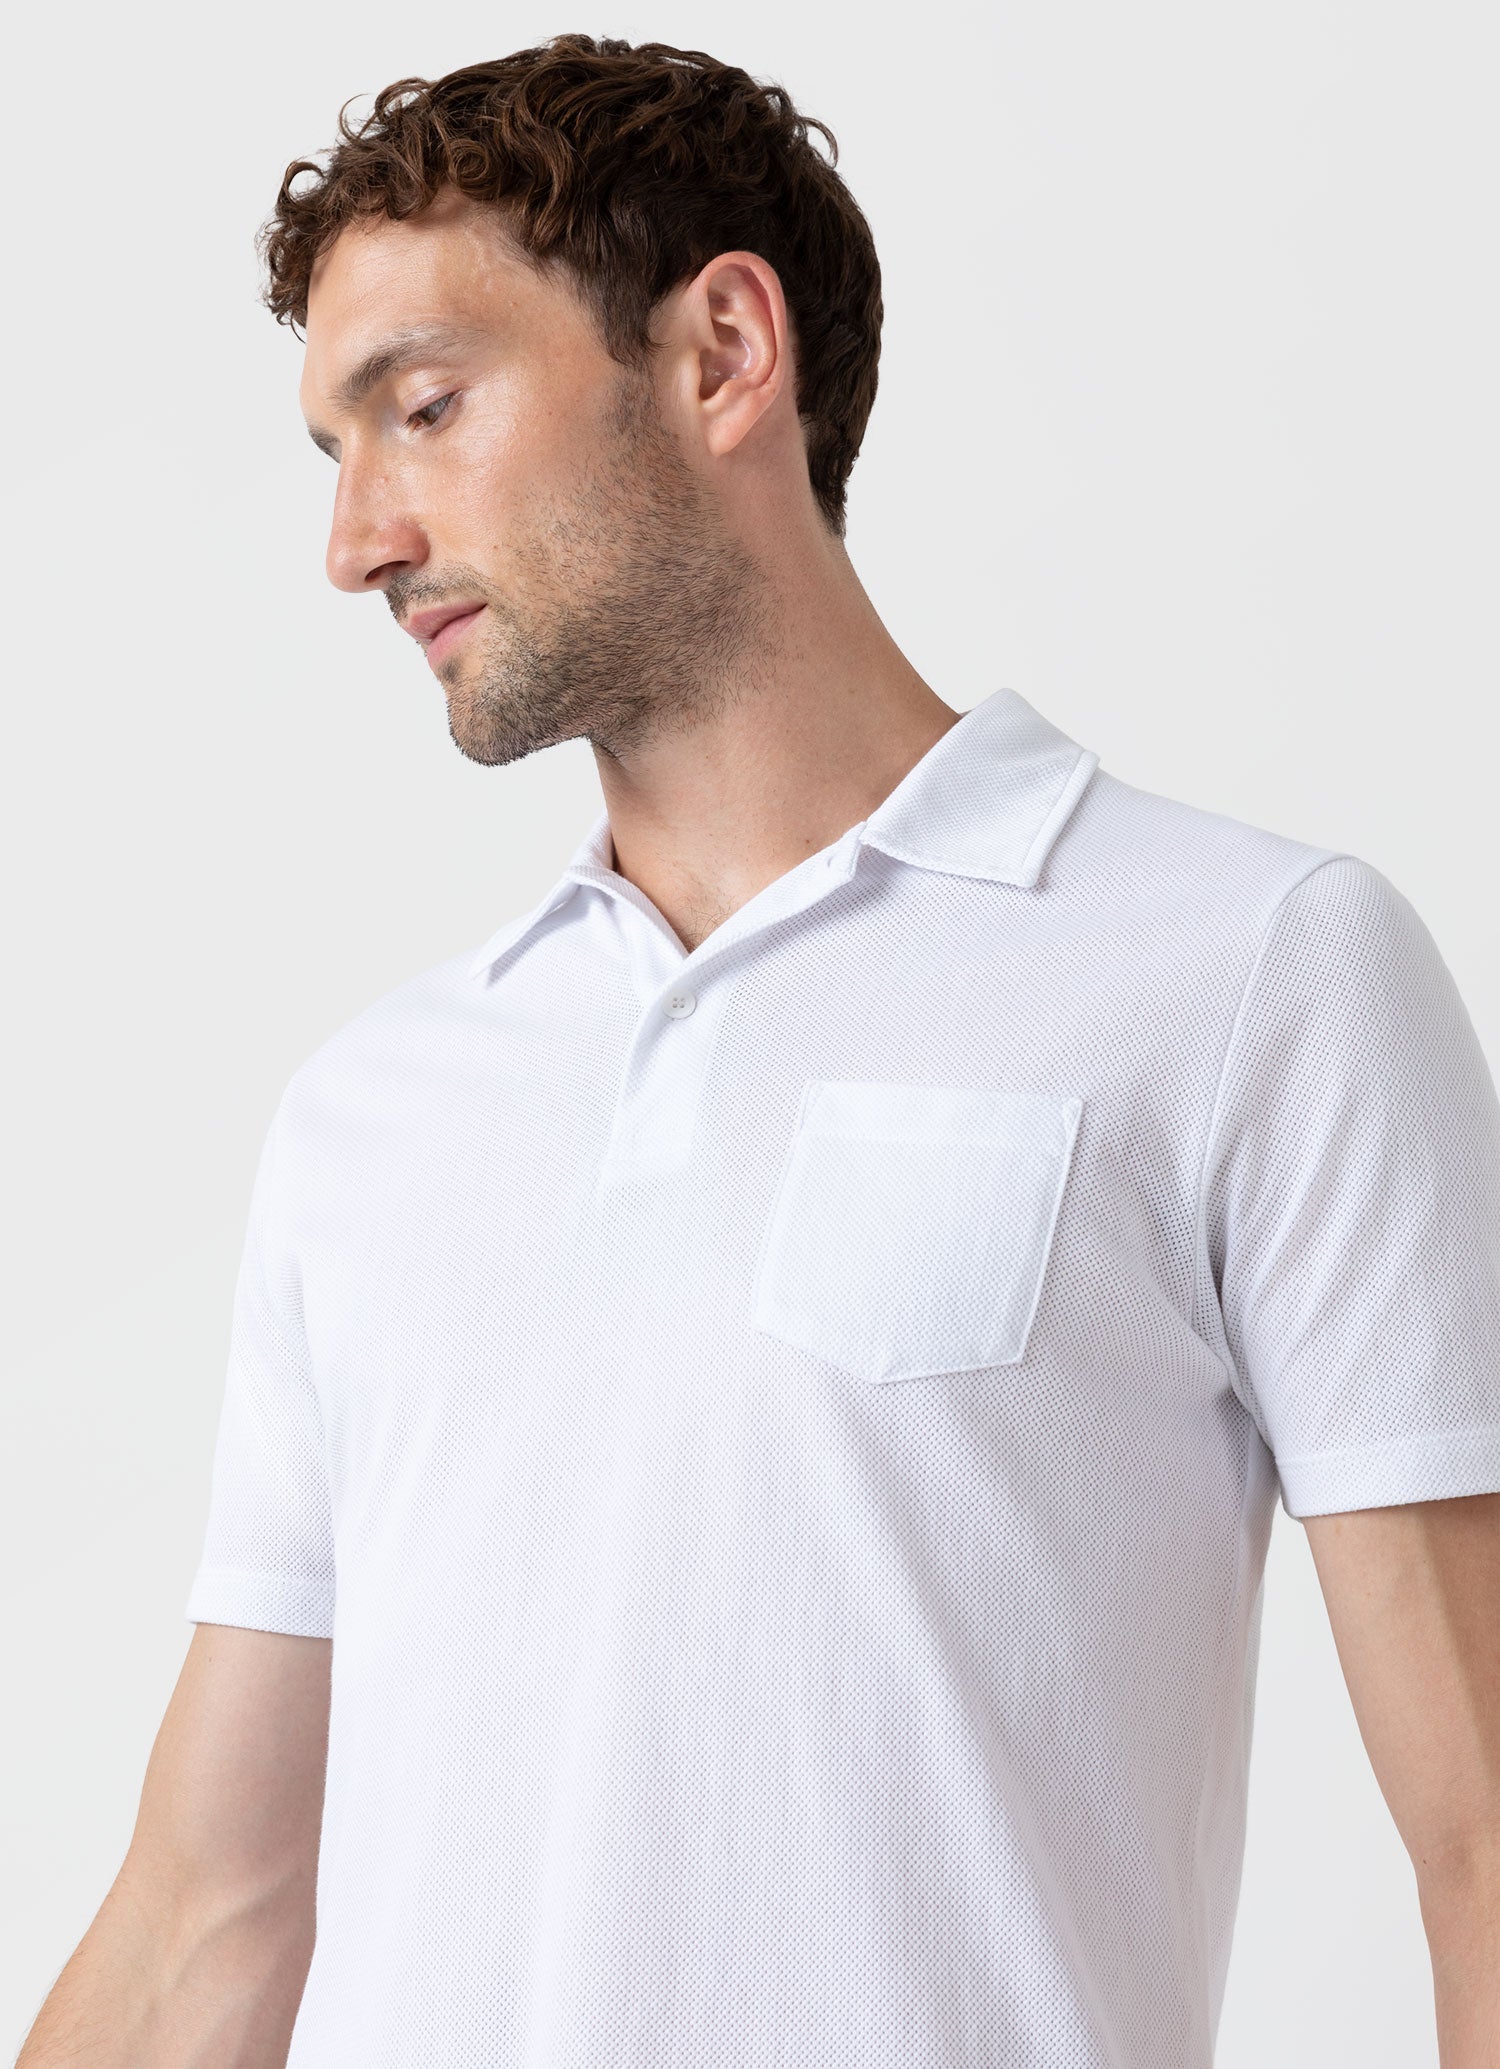 Men's Riviera Polo Shirt in White | Sunspel